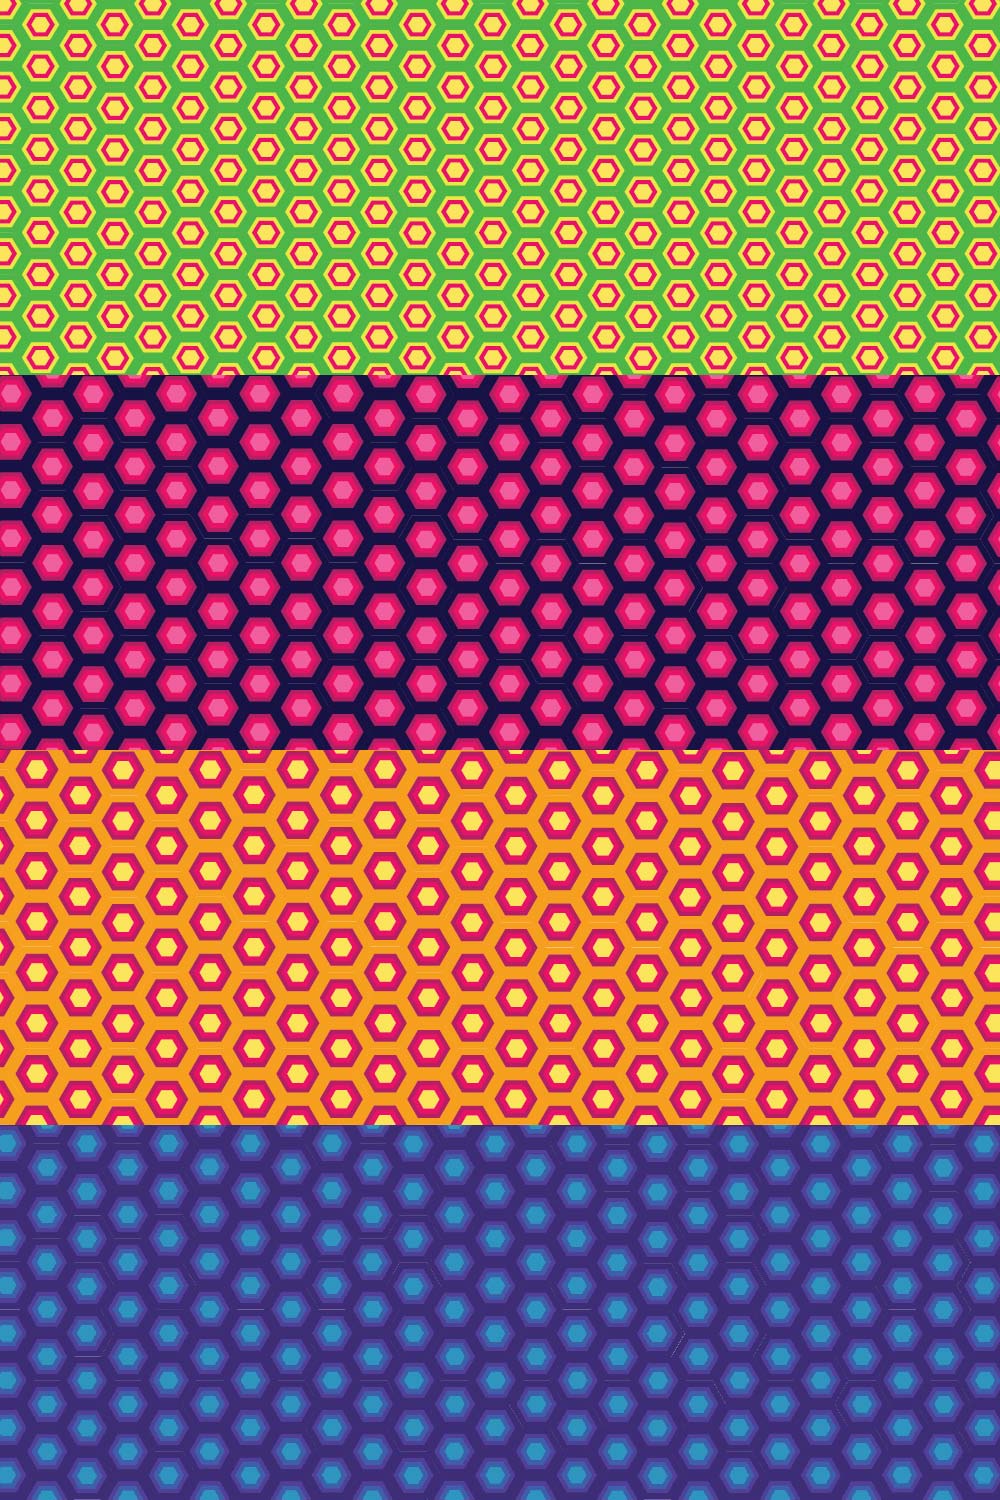 hexagon gift wrap pattern pinterest preview image.